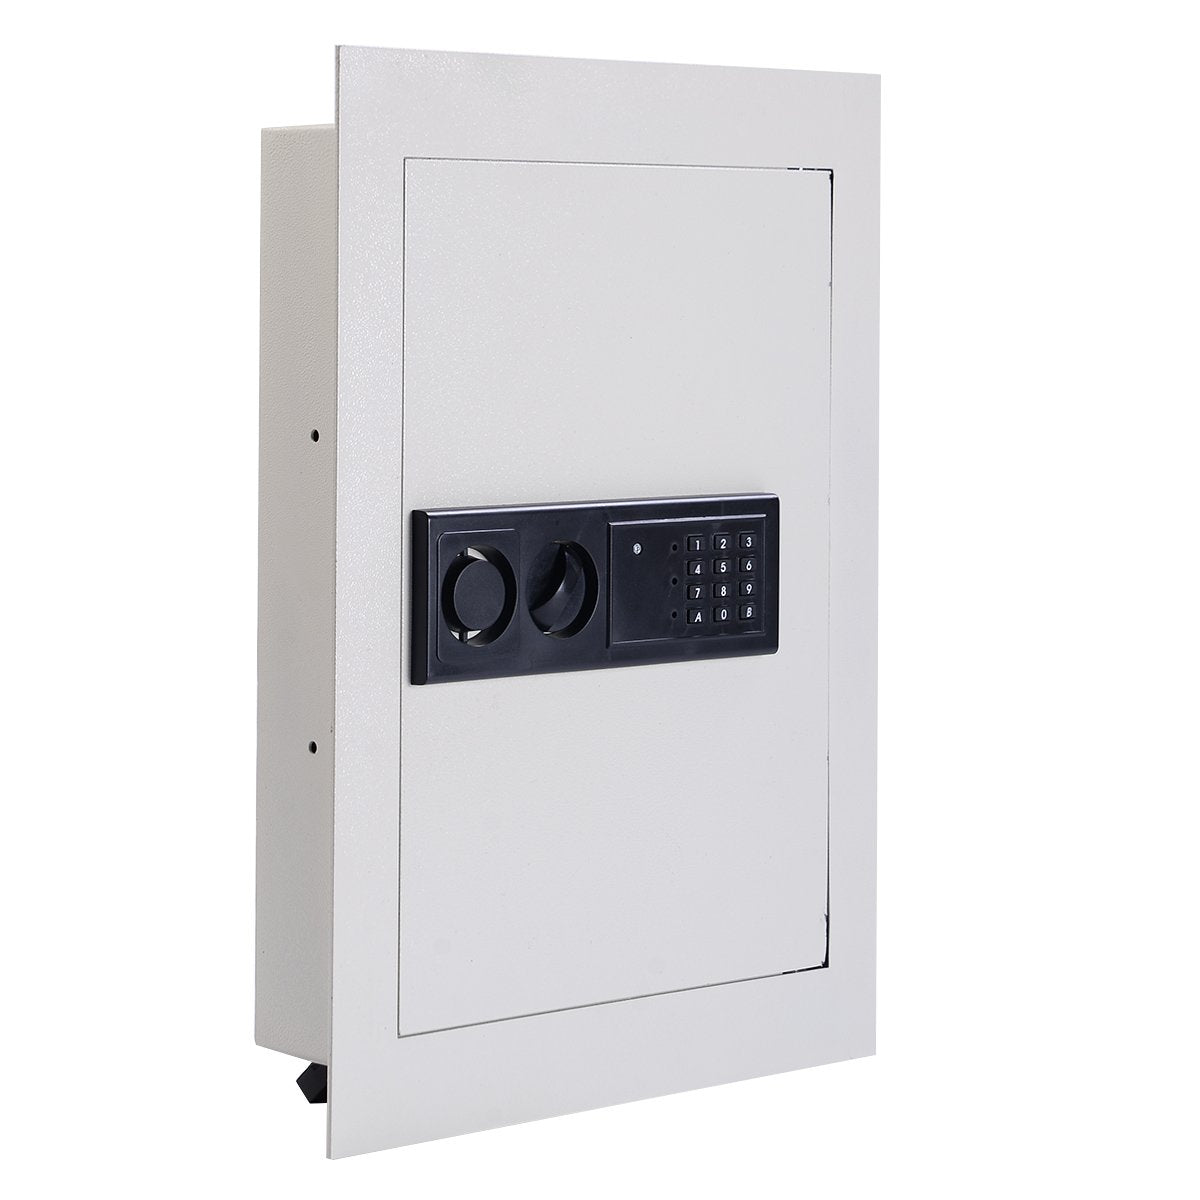 Giantex Electronic Wall Hidden Safe Security Box,.83 CF Built-In Wall Electronic Flat Security Safety Cabinet